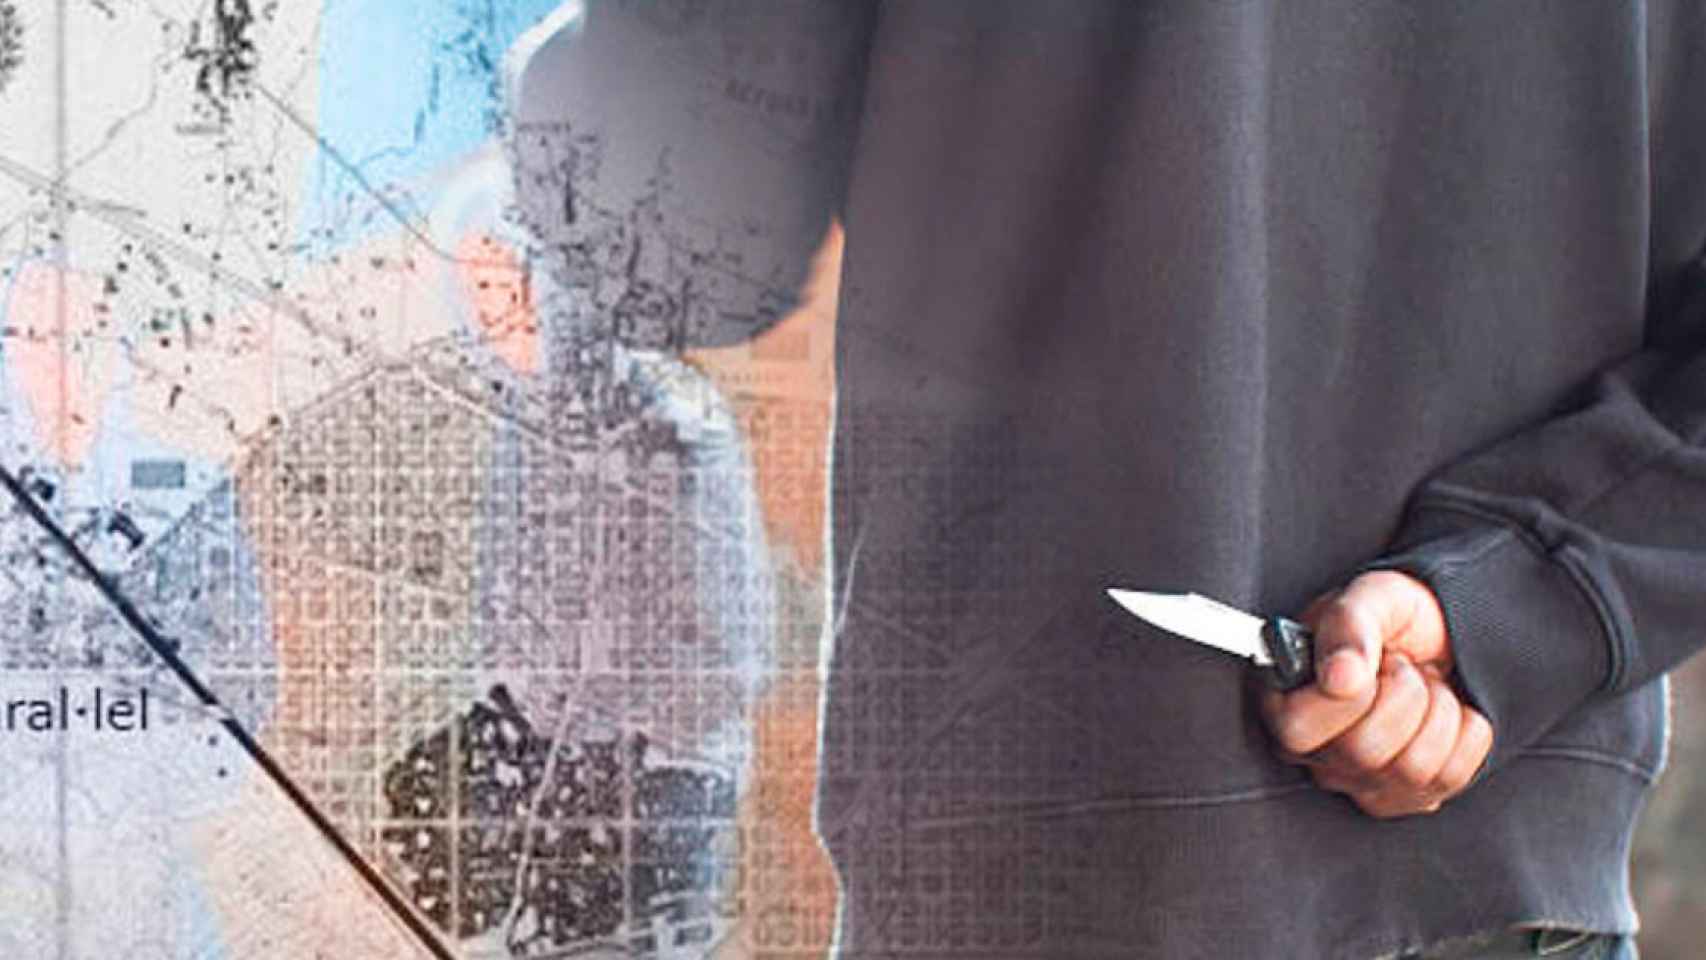 Un joven con arma blanca frente a un mapa de Barcelona / FOTOMONTAJE CG